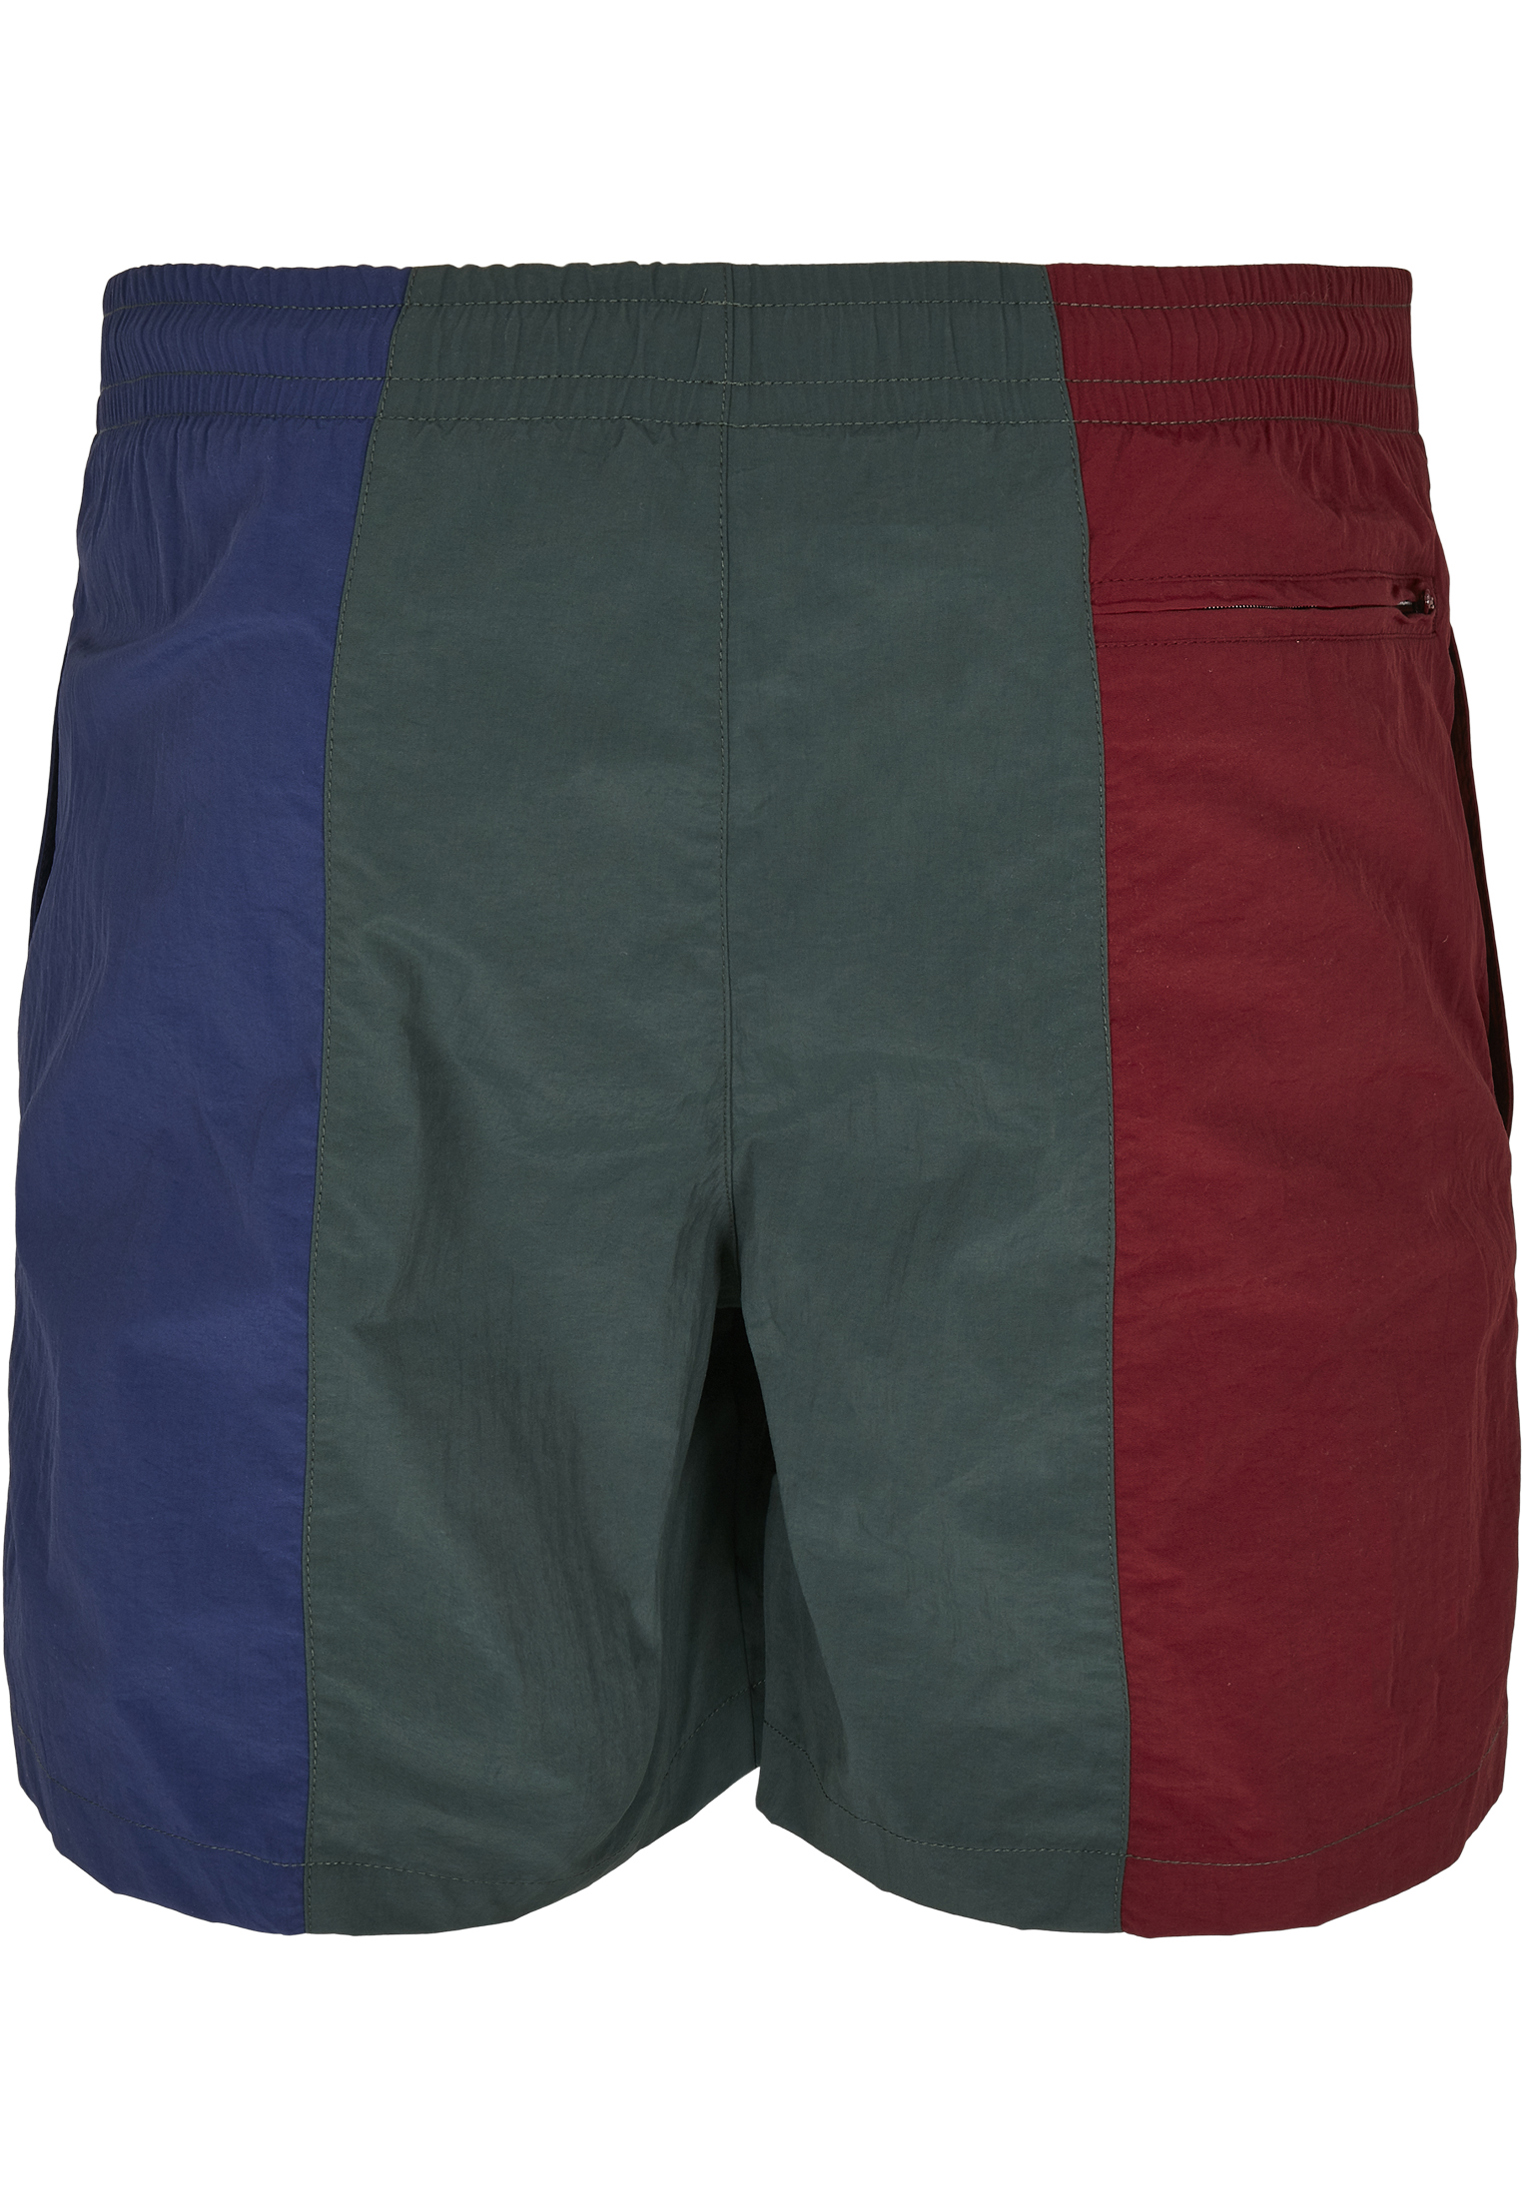 Bademode 3-Tone Swim Shorts in Farbe burgundy/bottlegreen